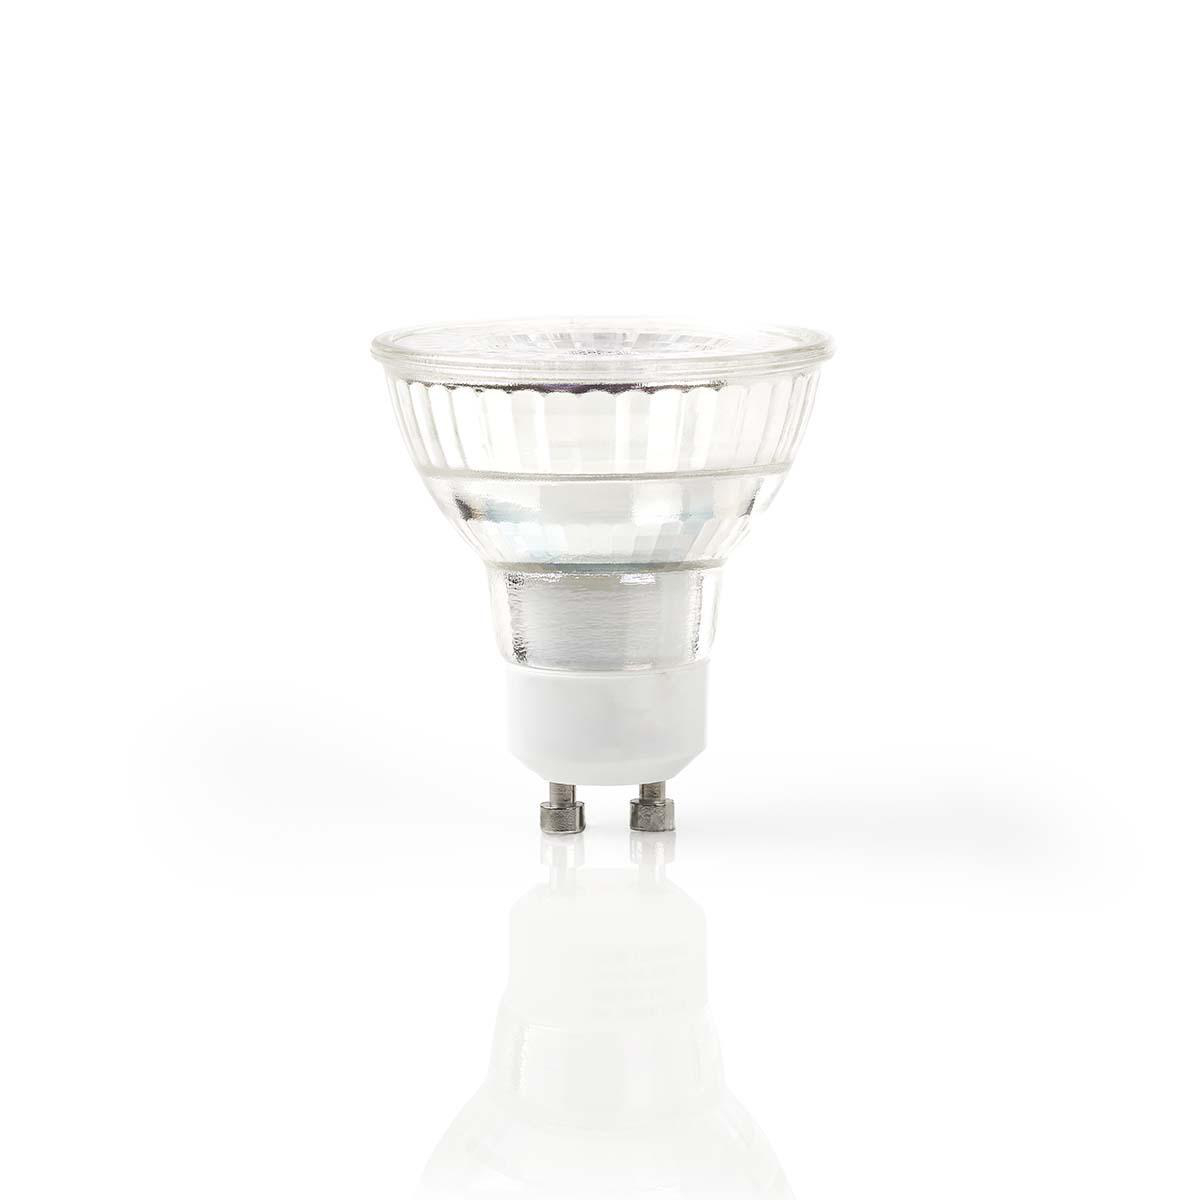 GU10 MR16 LED 5W Leuchtmittel Einbauspots Lampe Birne warmweiss dimmbar